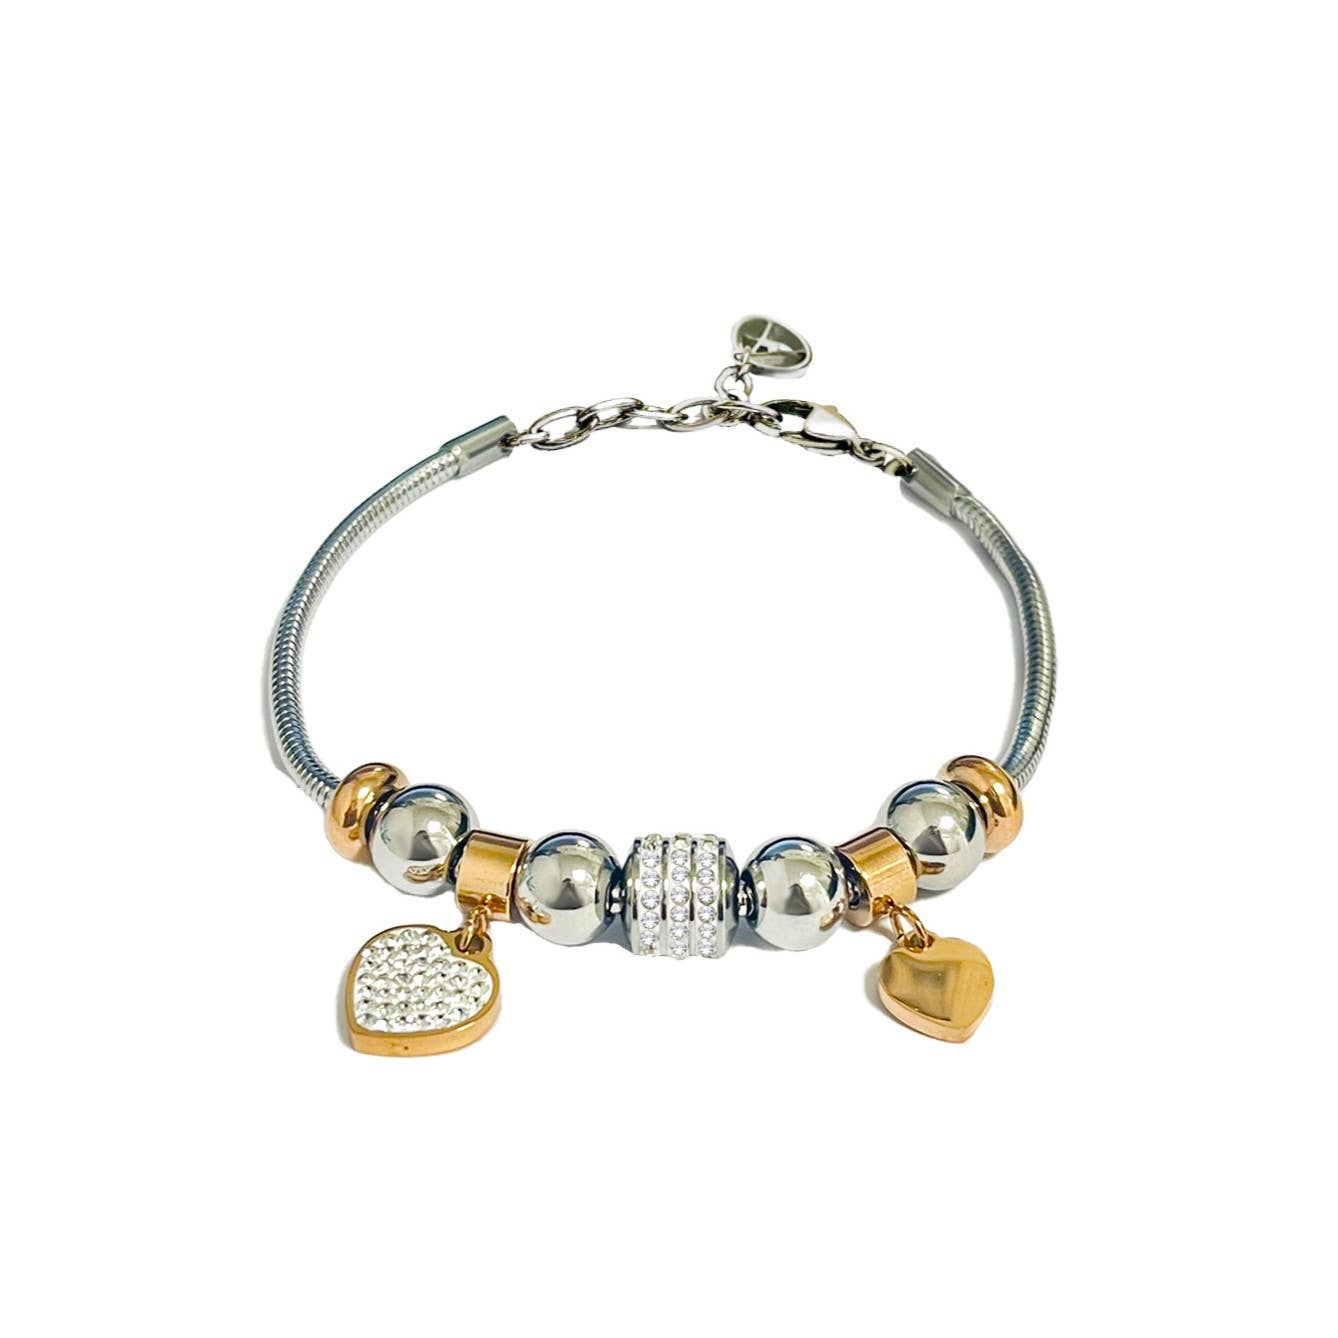 Juicy Couture Gold Bracelet - Bracelets - White Rock, British Columbia, Facebook Marketplace